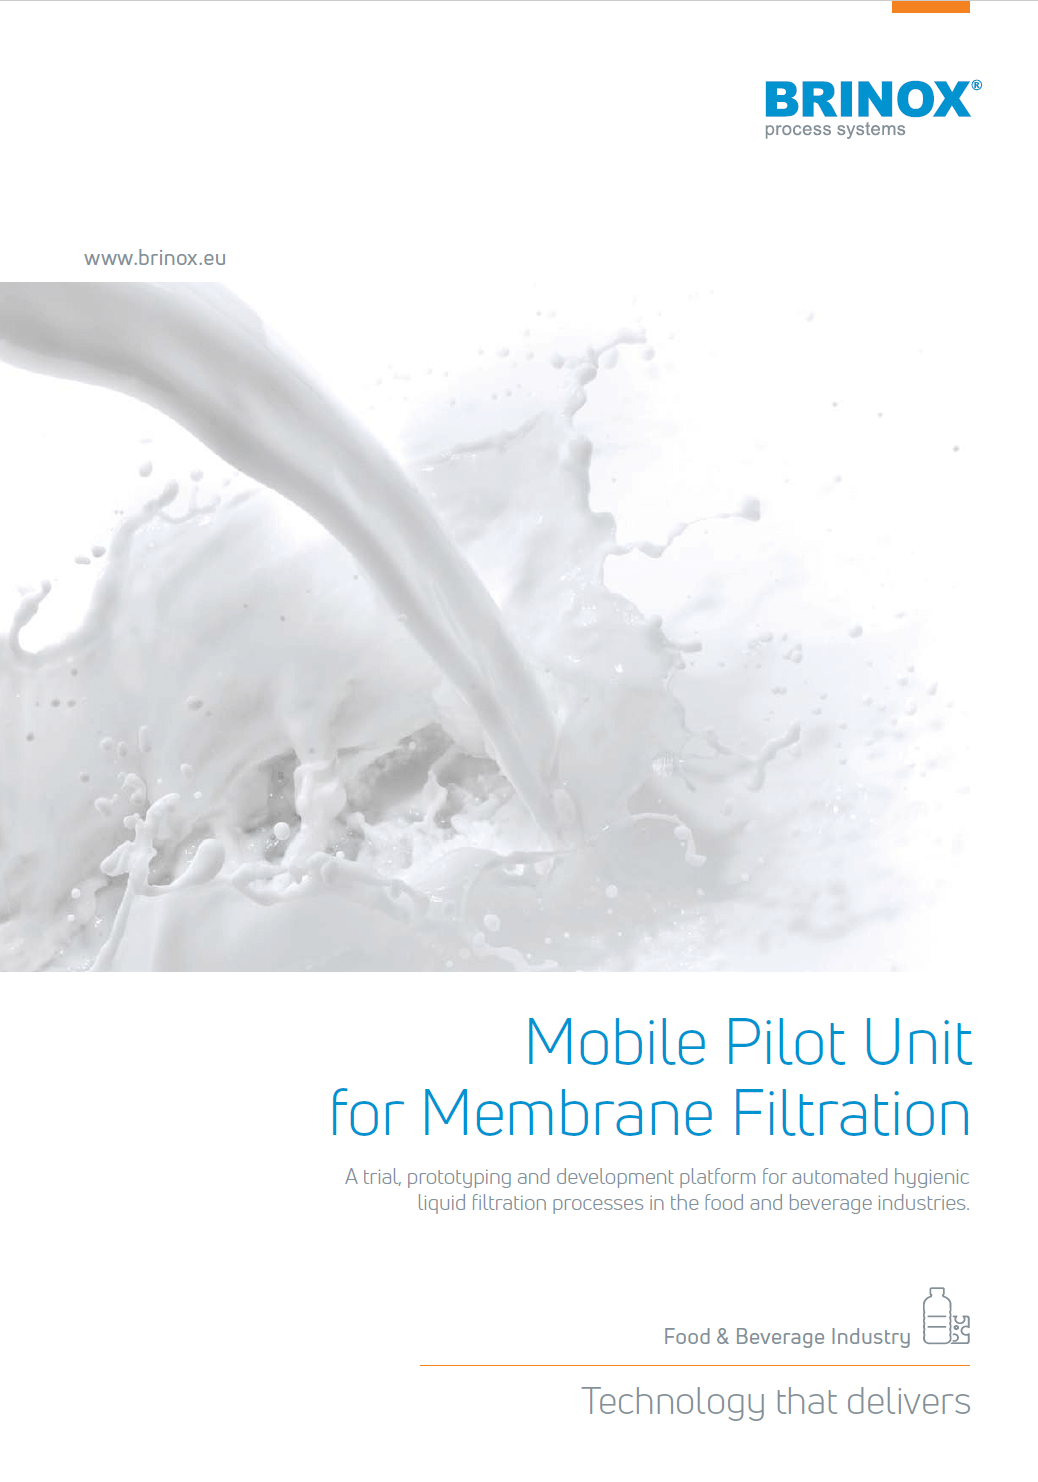 Brinox Mobile Pilot Unit for Membrane Filtration